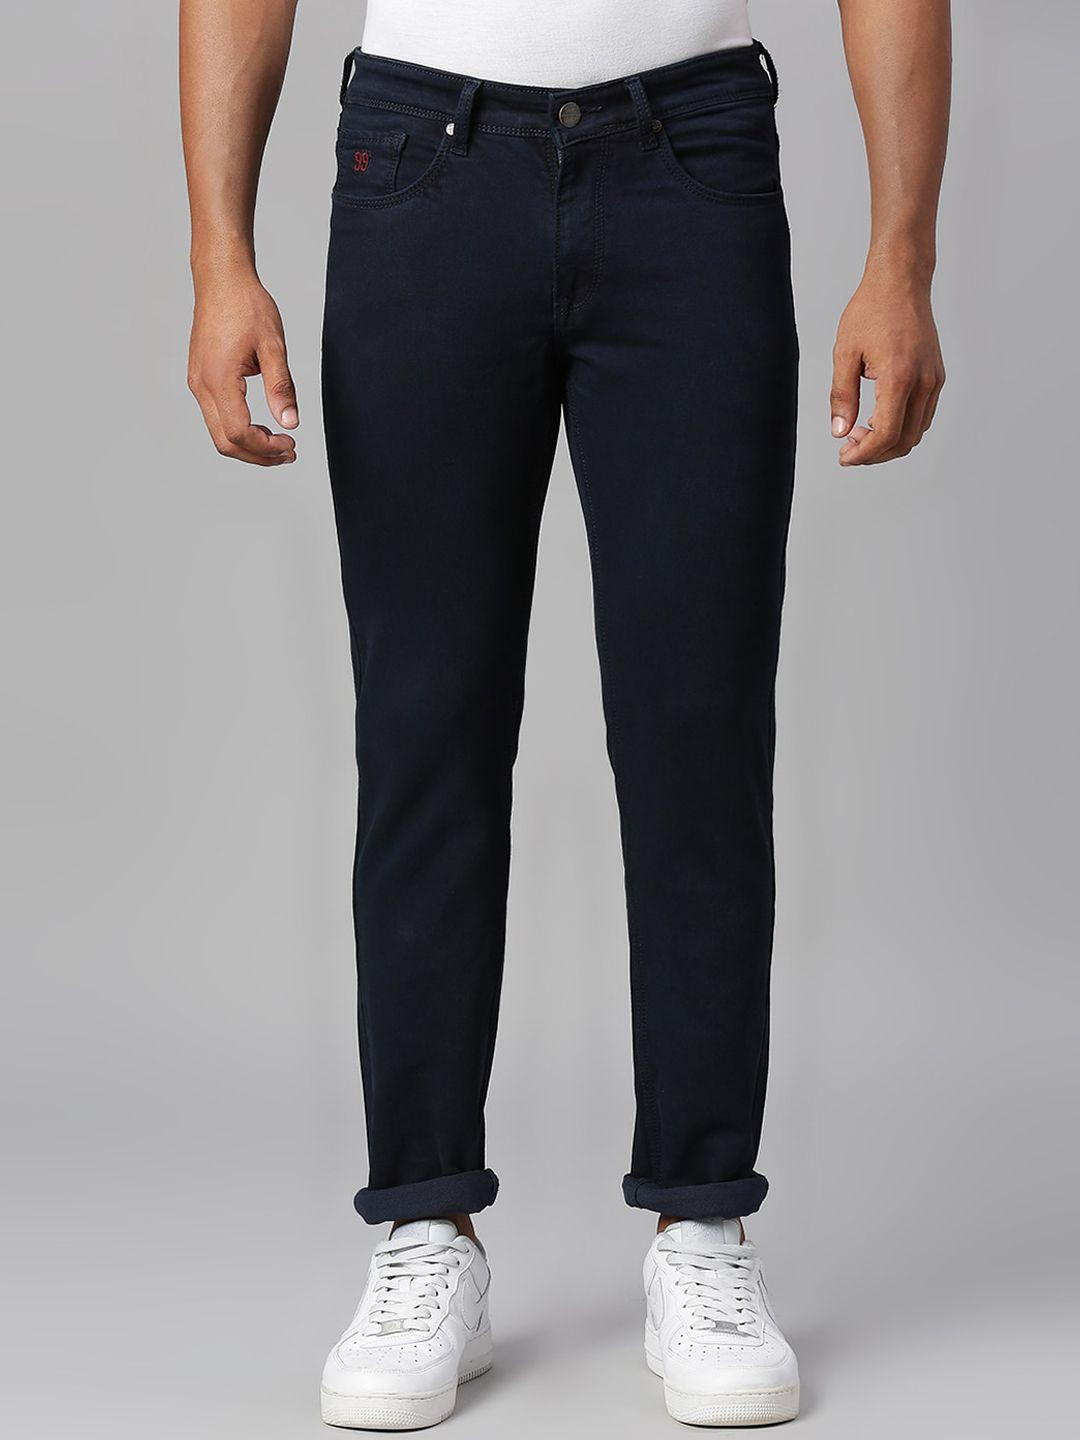 hj-hasasi-men-slim-fit-stretchable-cotton-jeans